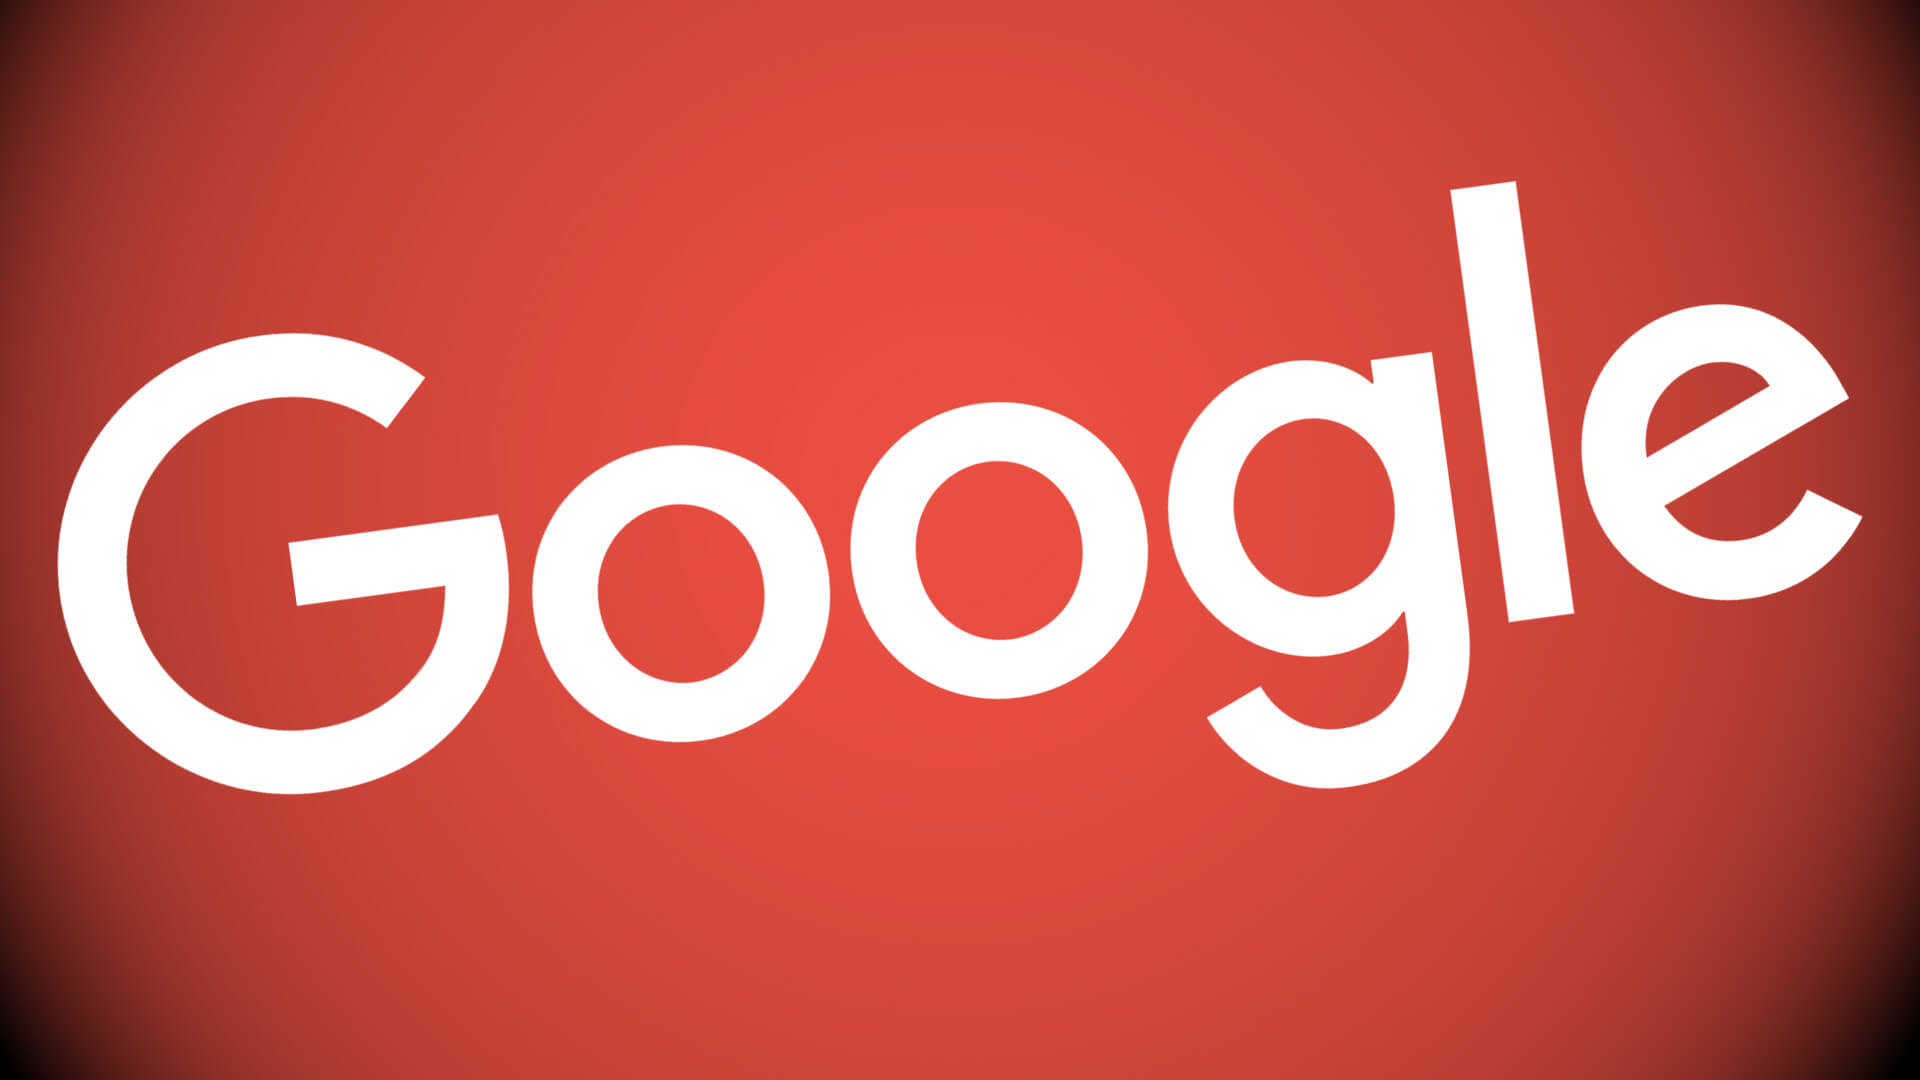 google-logo-red1-slant-1920